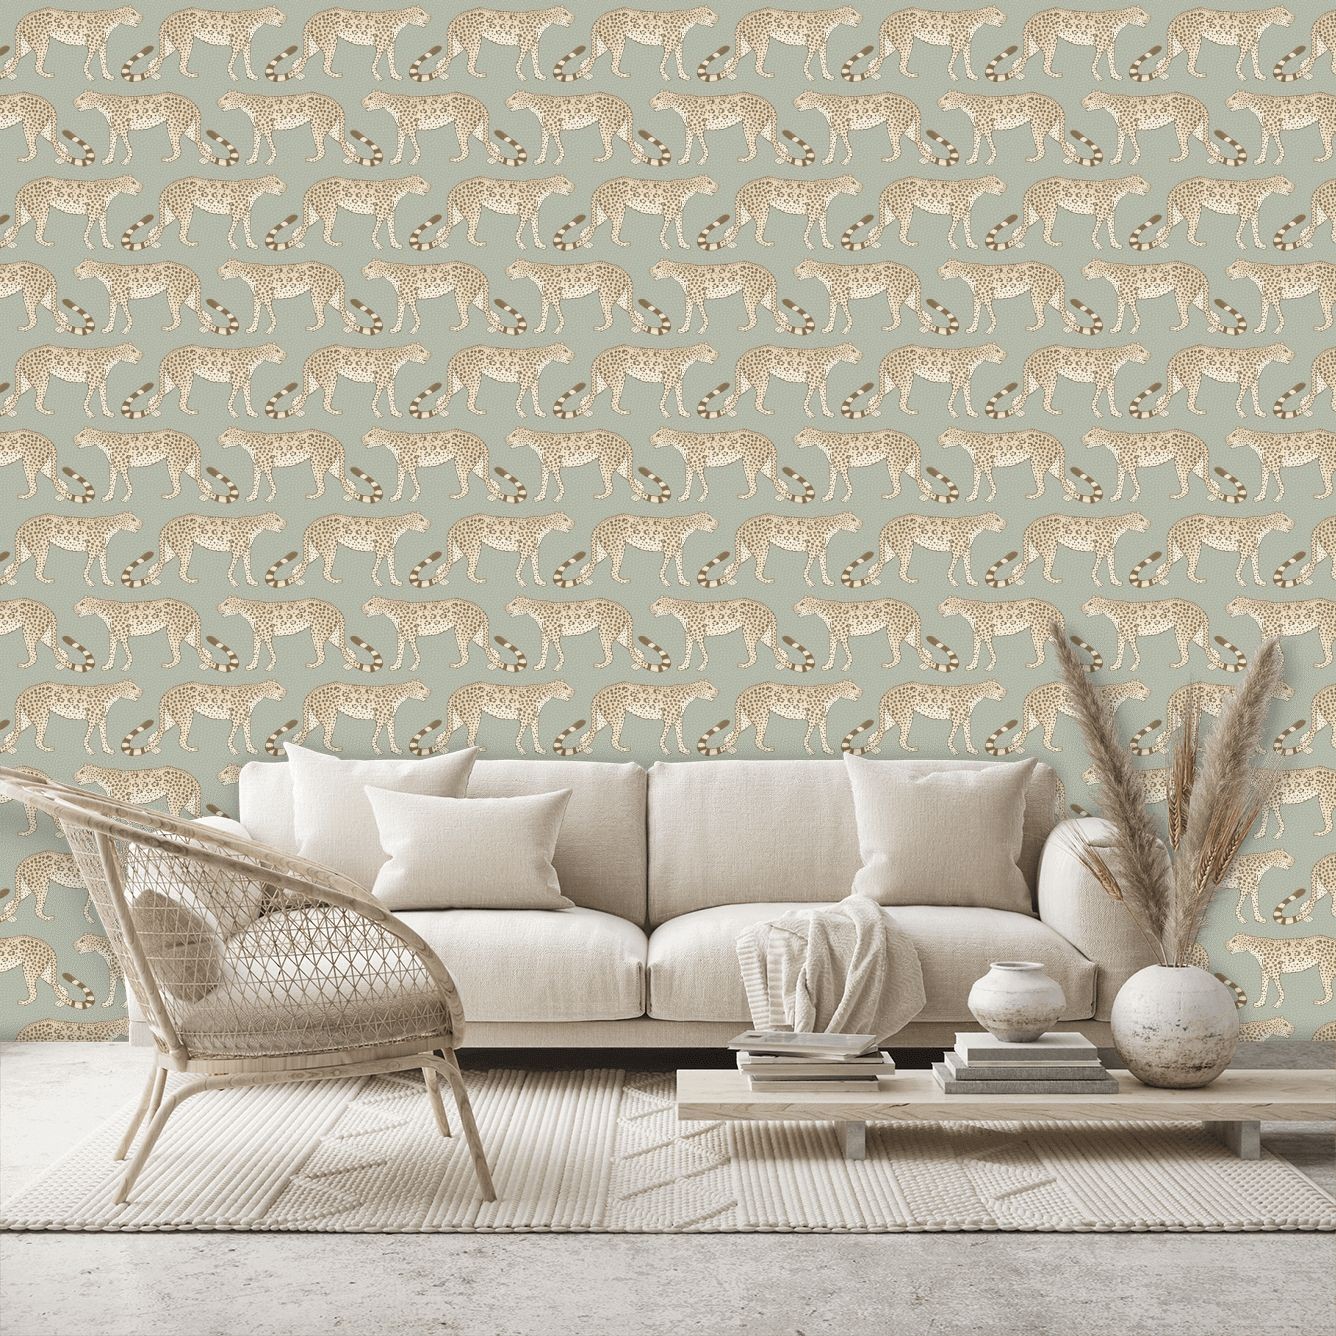 RoomMates Cheetah Cheetah Peel and Stick Wallpaper - Whites